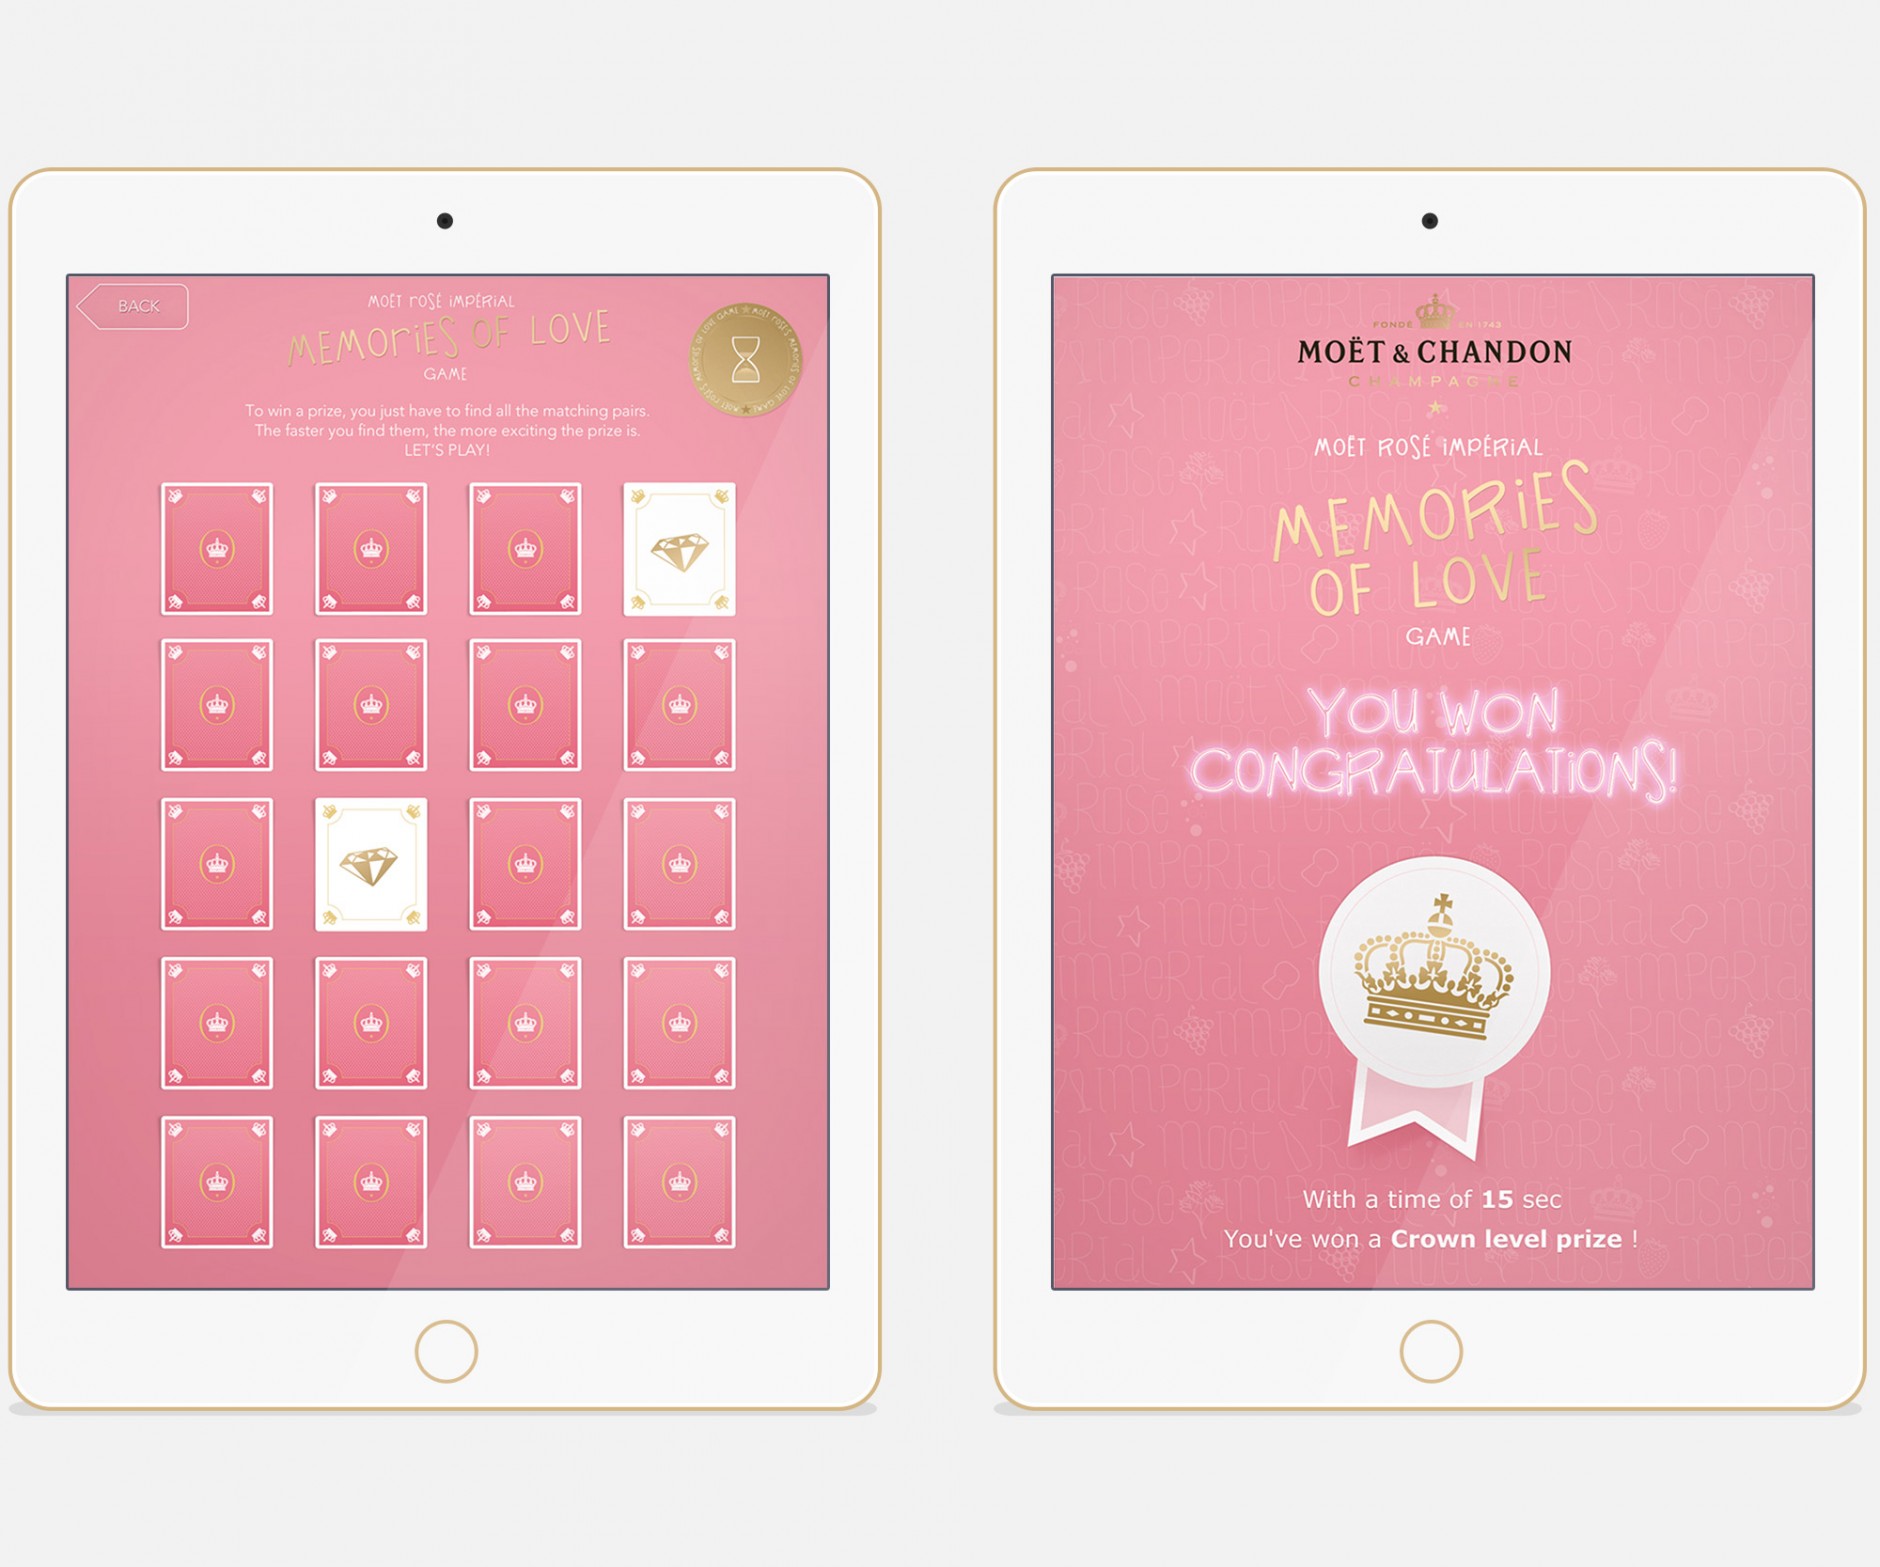 Moet & chandon champagne luxe ui design iPad game - mael burgy